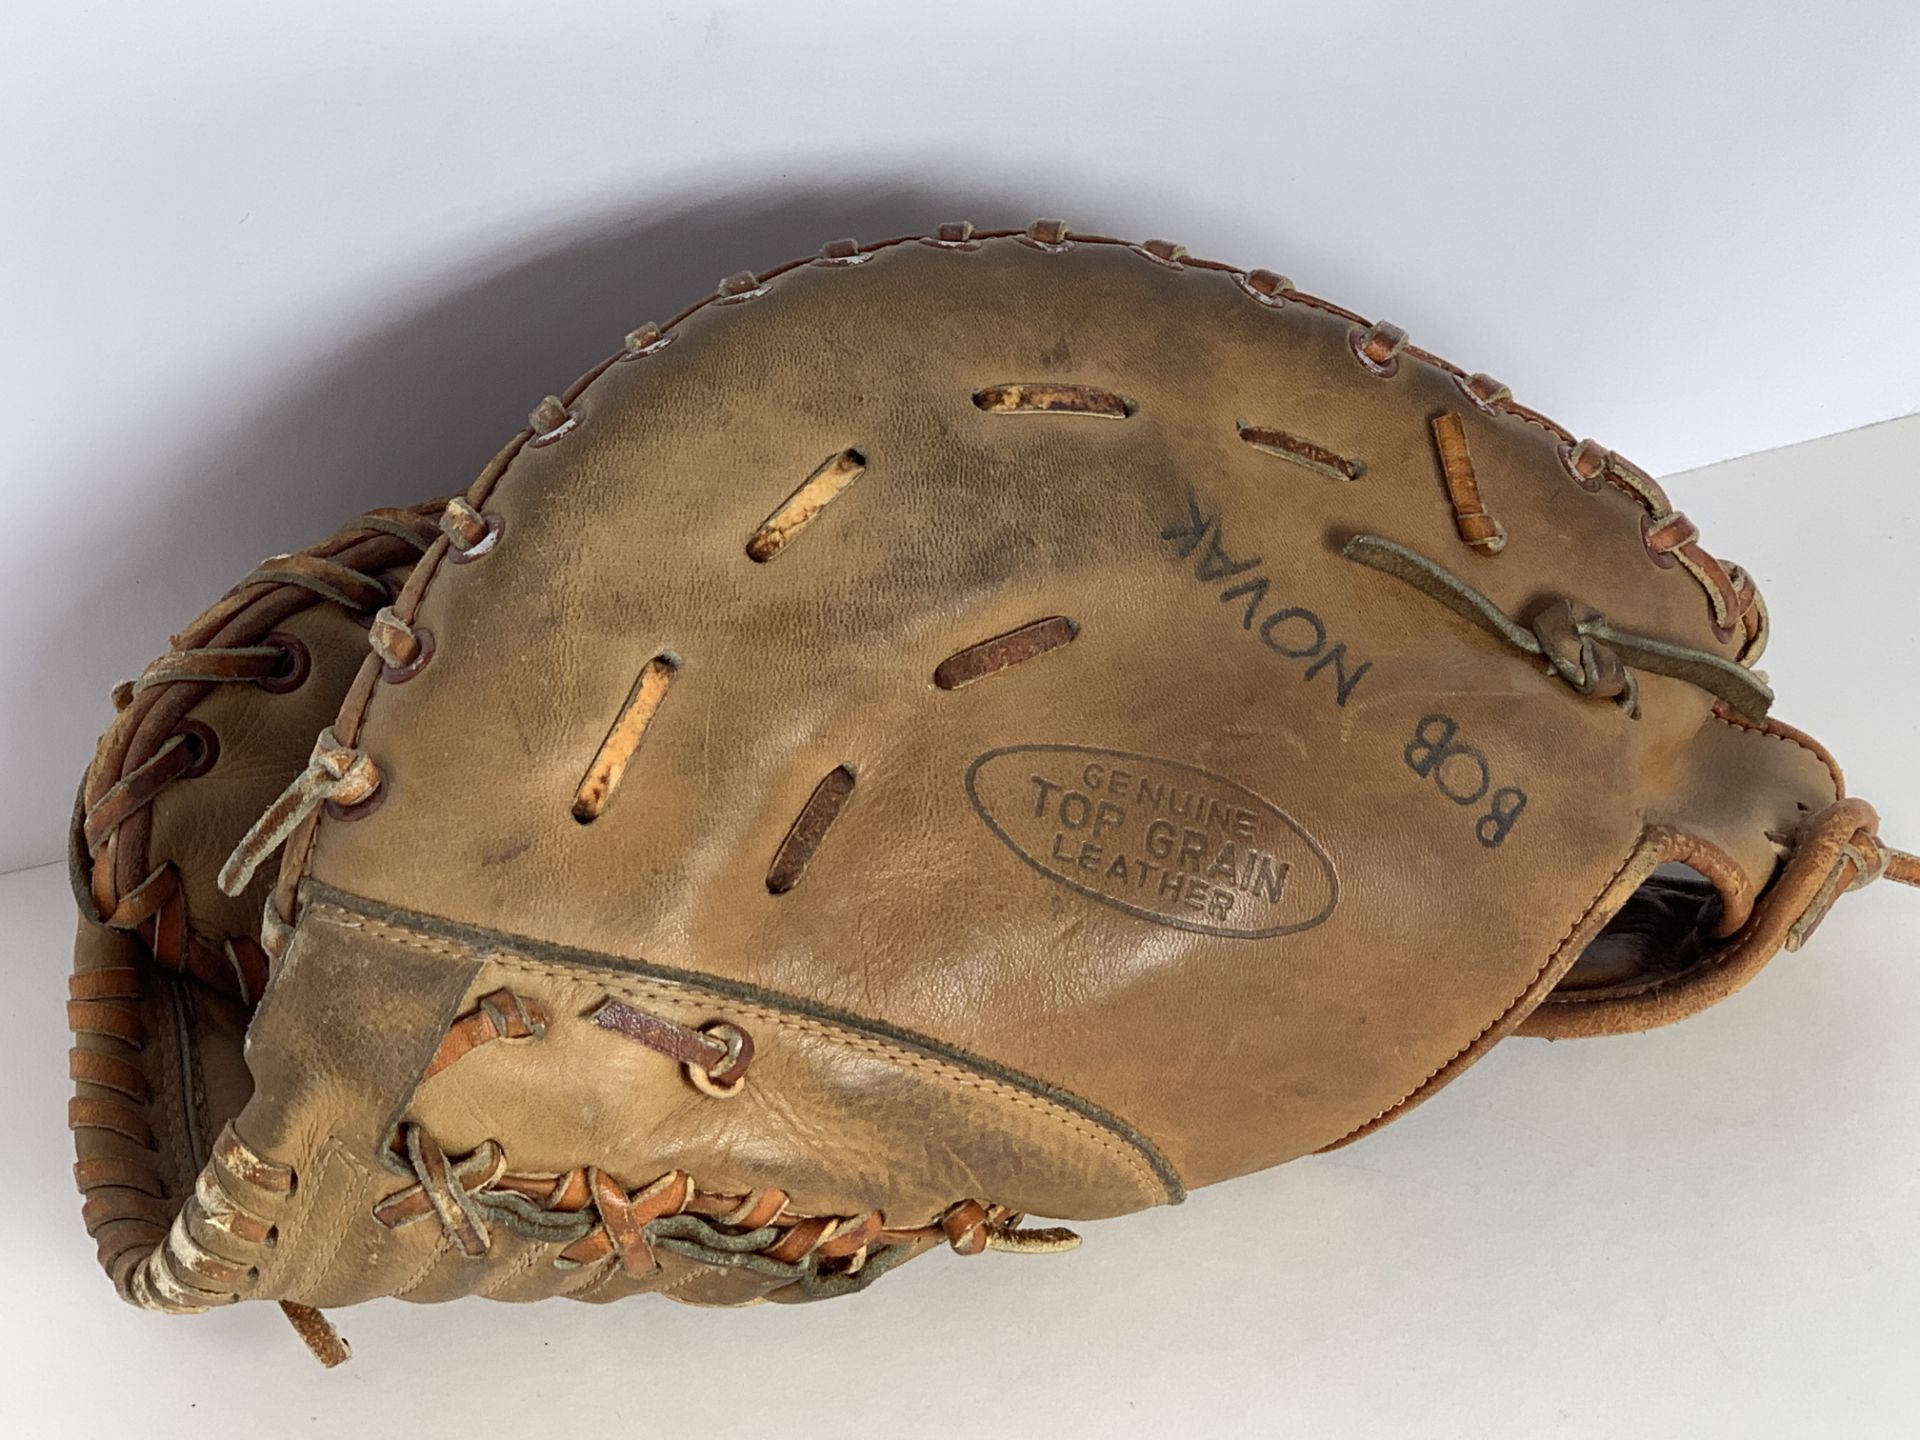 Vintage Baseball Glove and 2 Balls, Sports Memorabilia, Corsair Genuine Top Grain Leather - Image 3 of 6